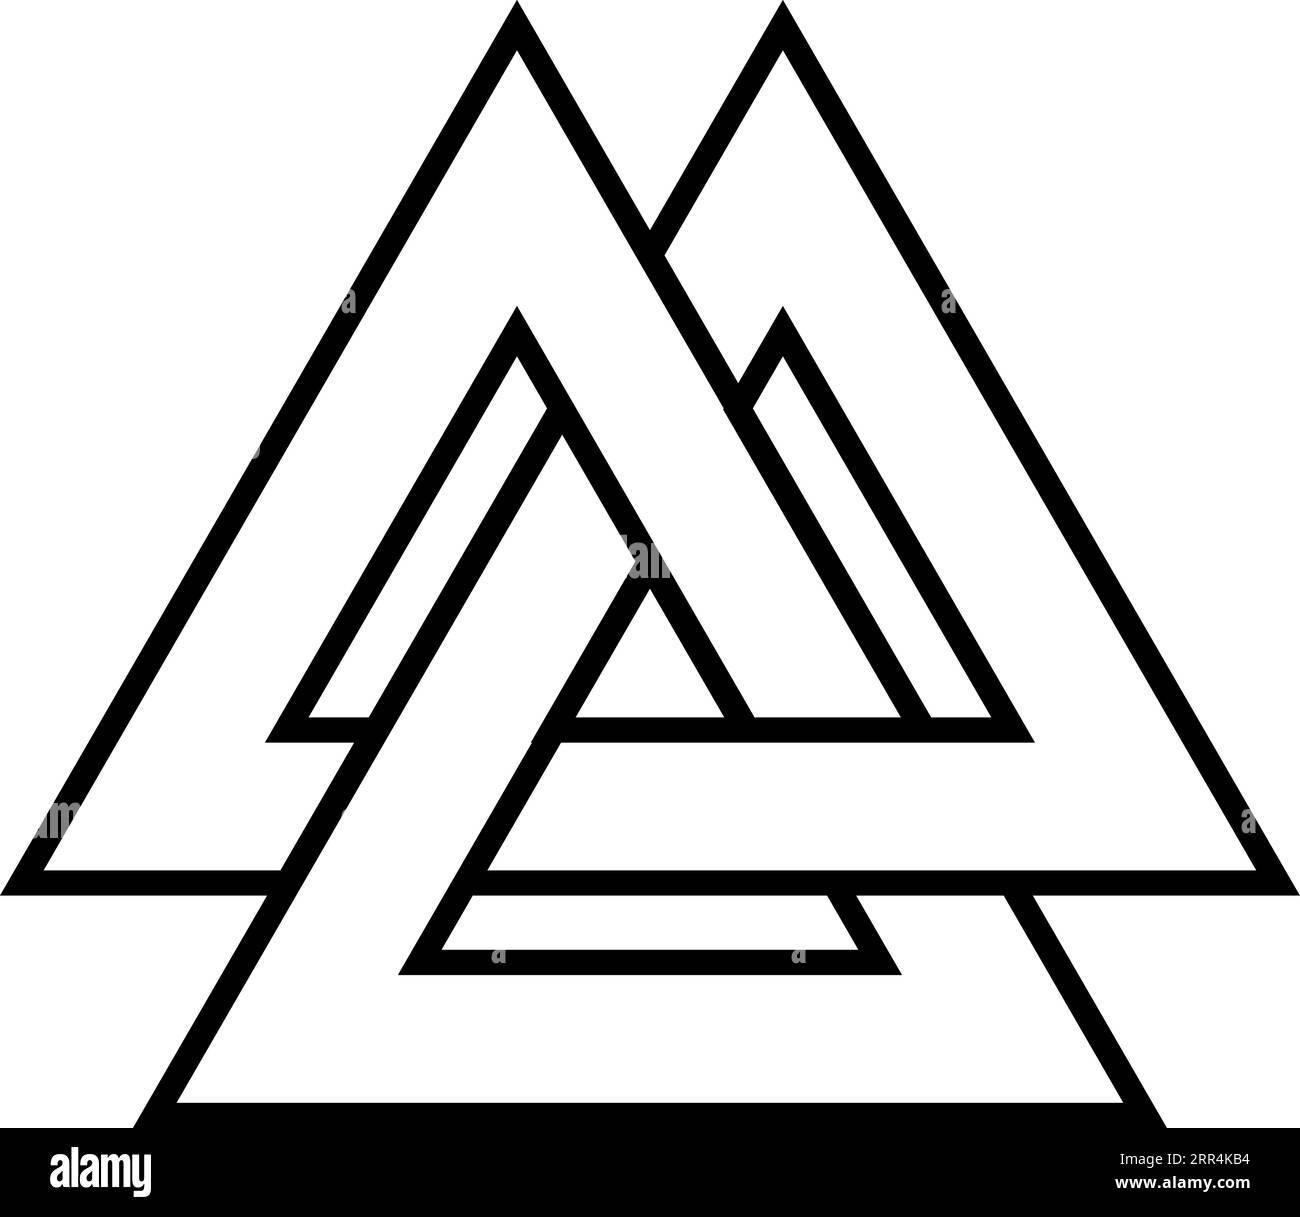 Valknut symbol, triangle logo, Viking age symbol, Celtic knot tattoo Stock Vector